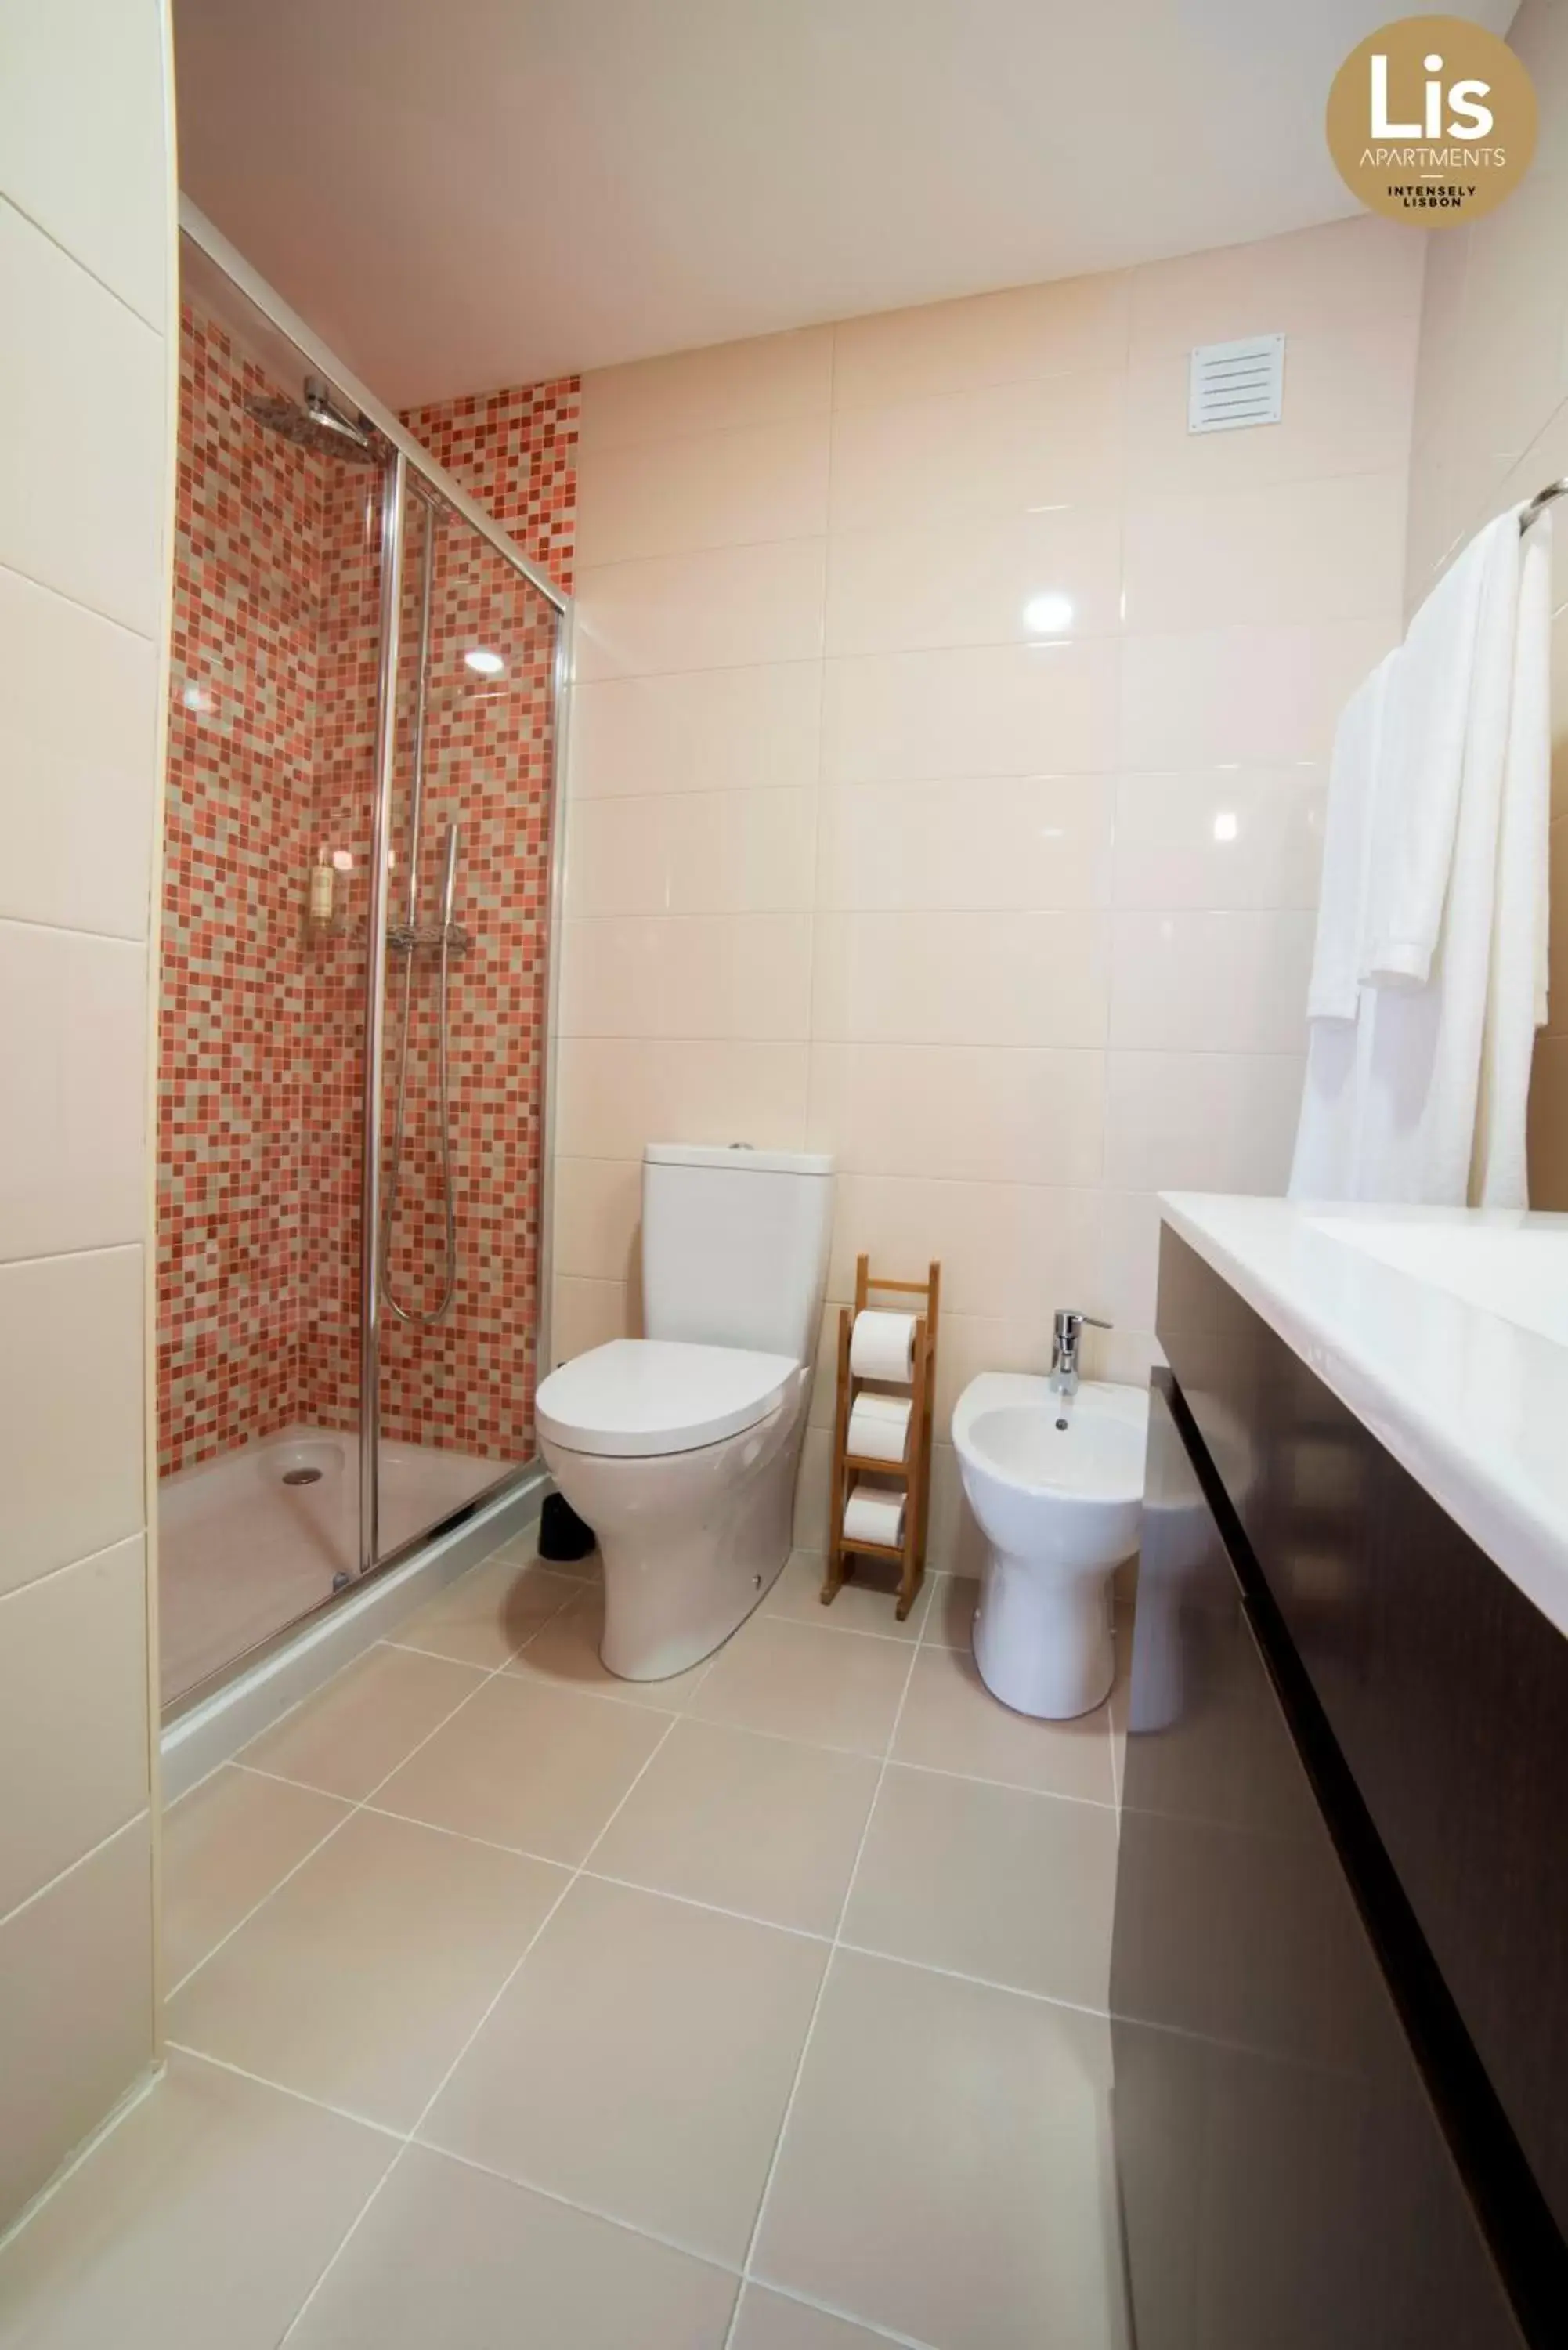 Toilet, Bathroom in Lis Apartments